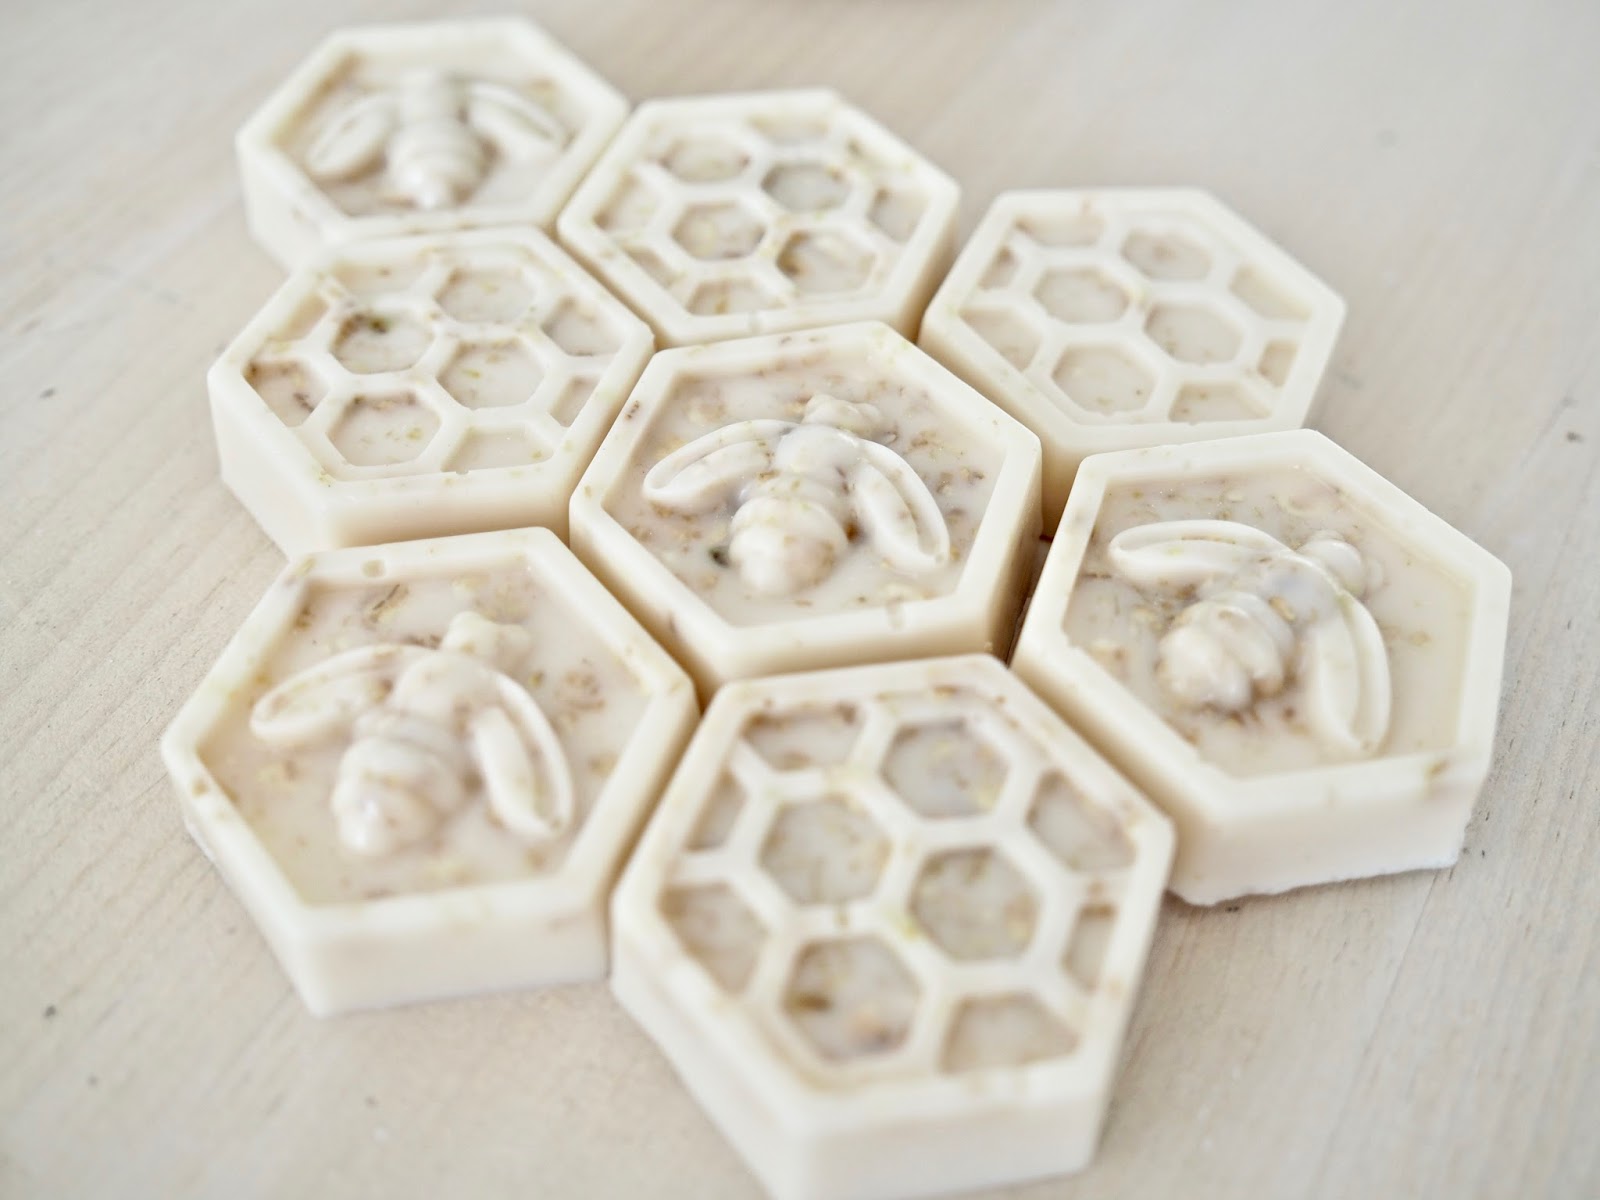 Handmade soap
